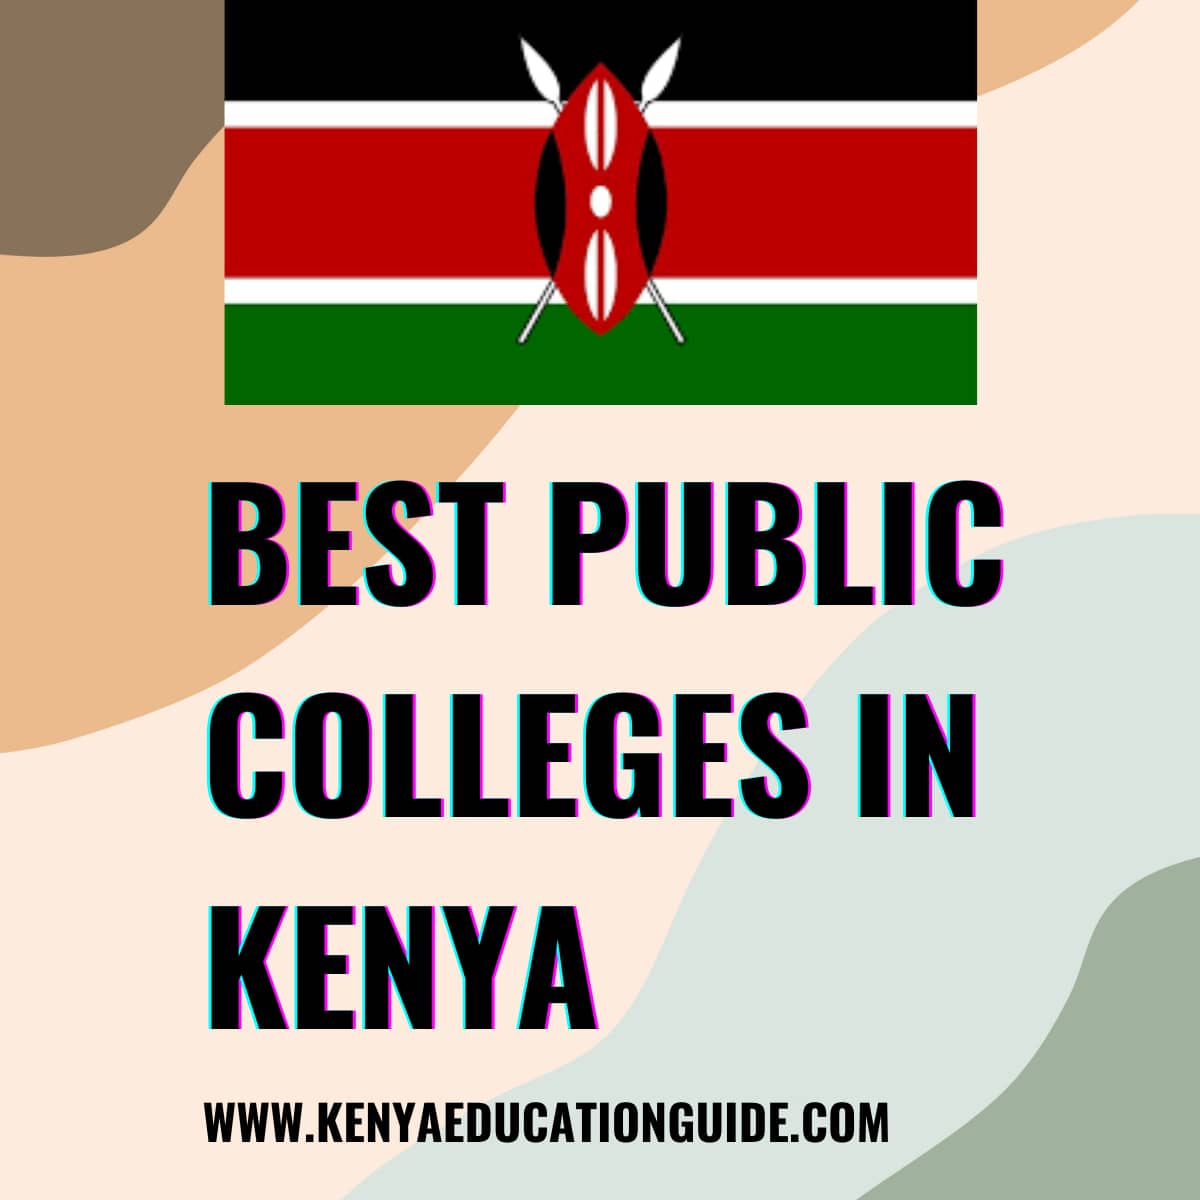 Best Public Colleges in Kenya